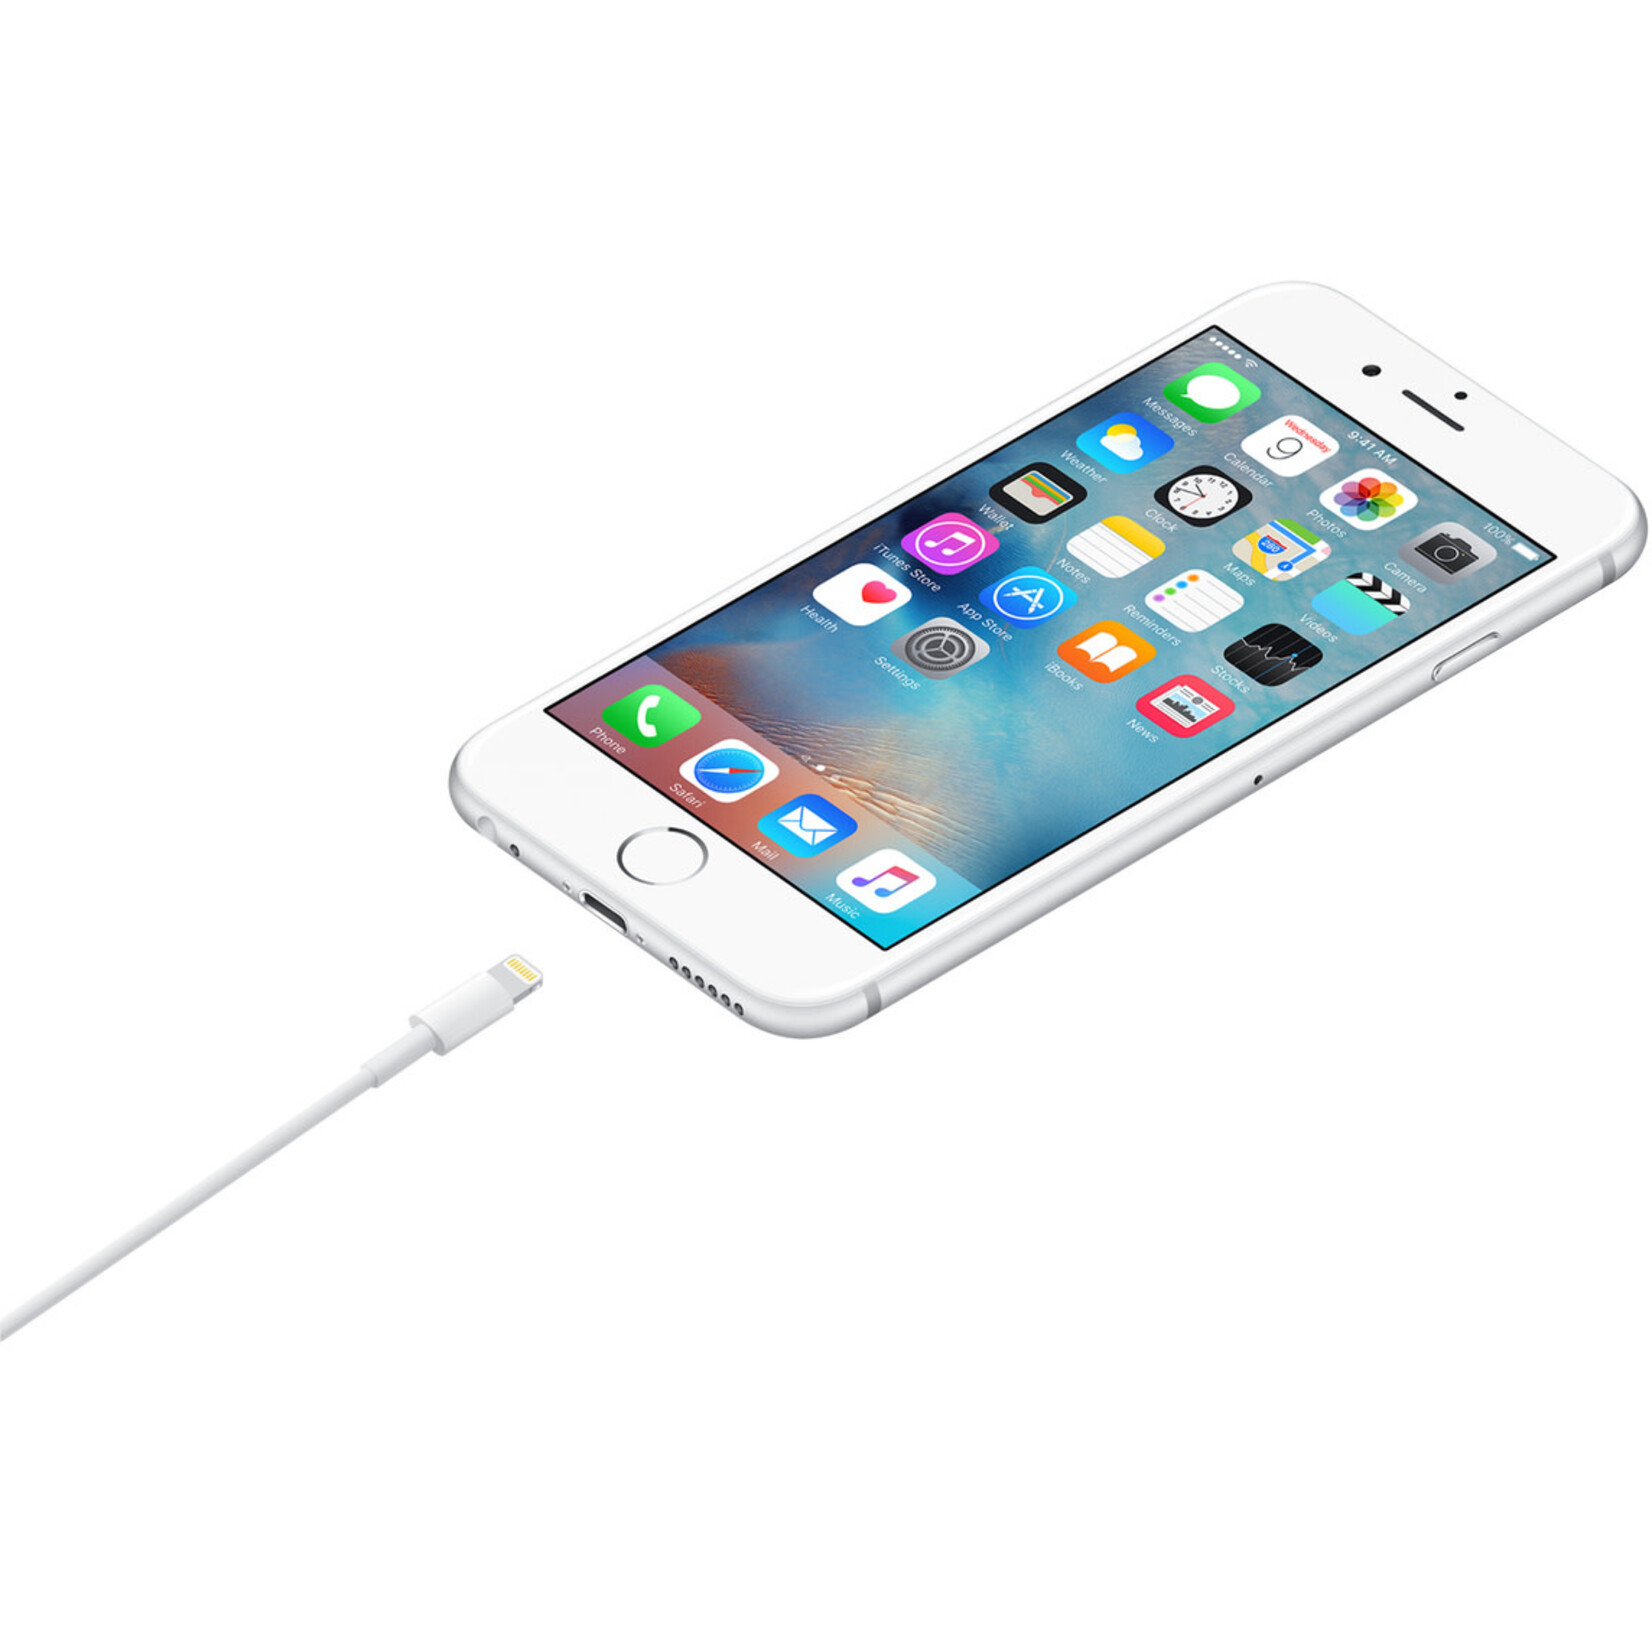 Apple Lightning to USB (1m)